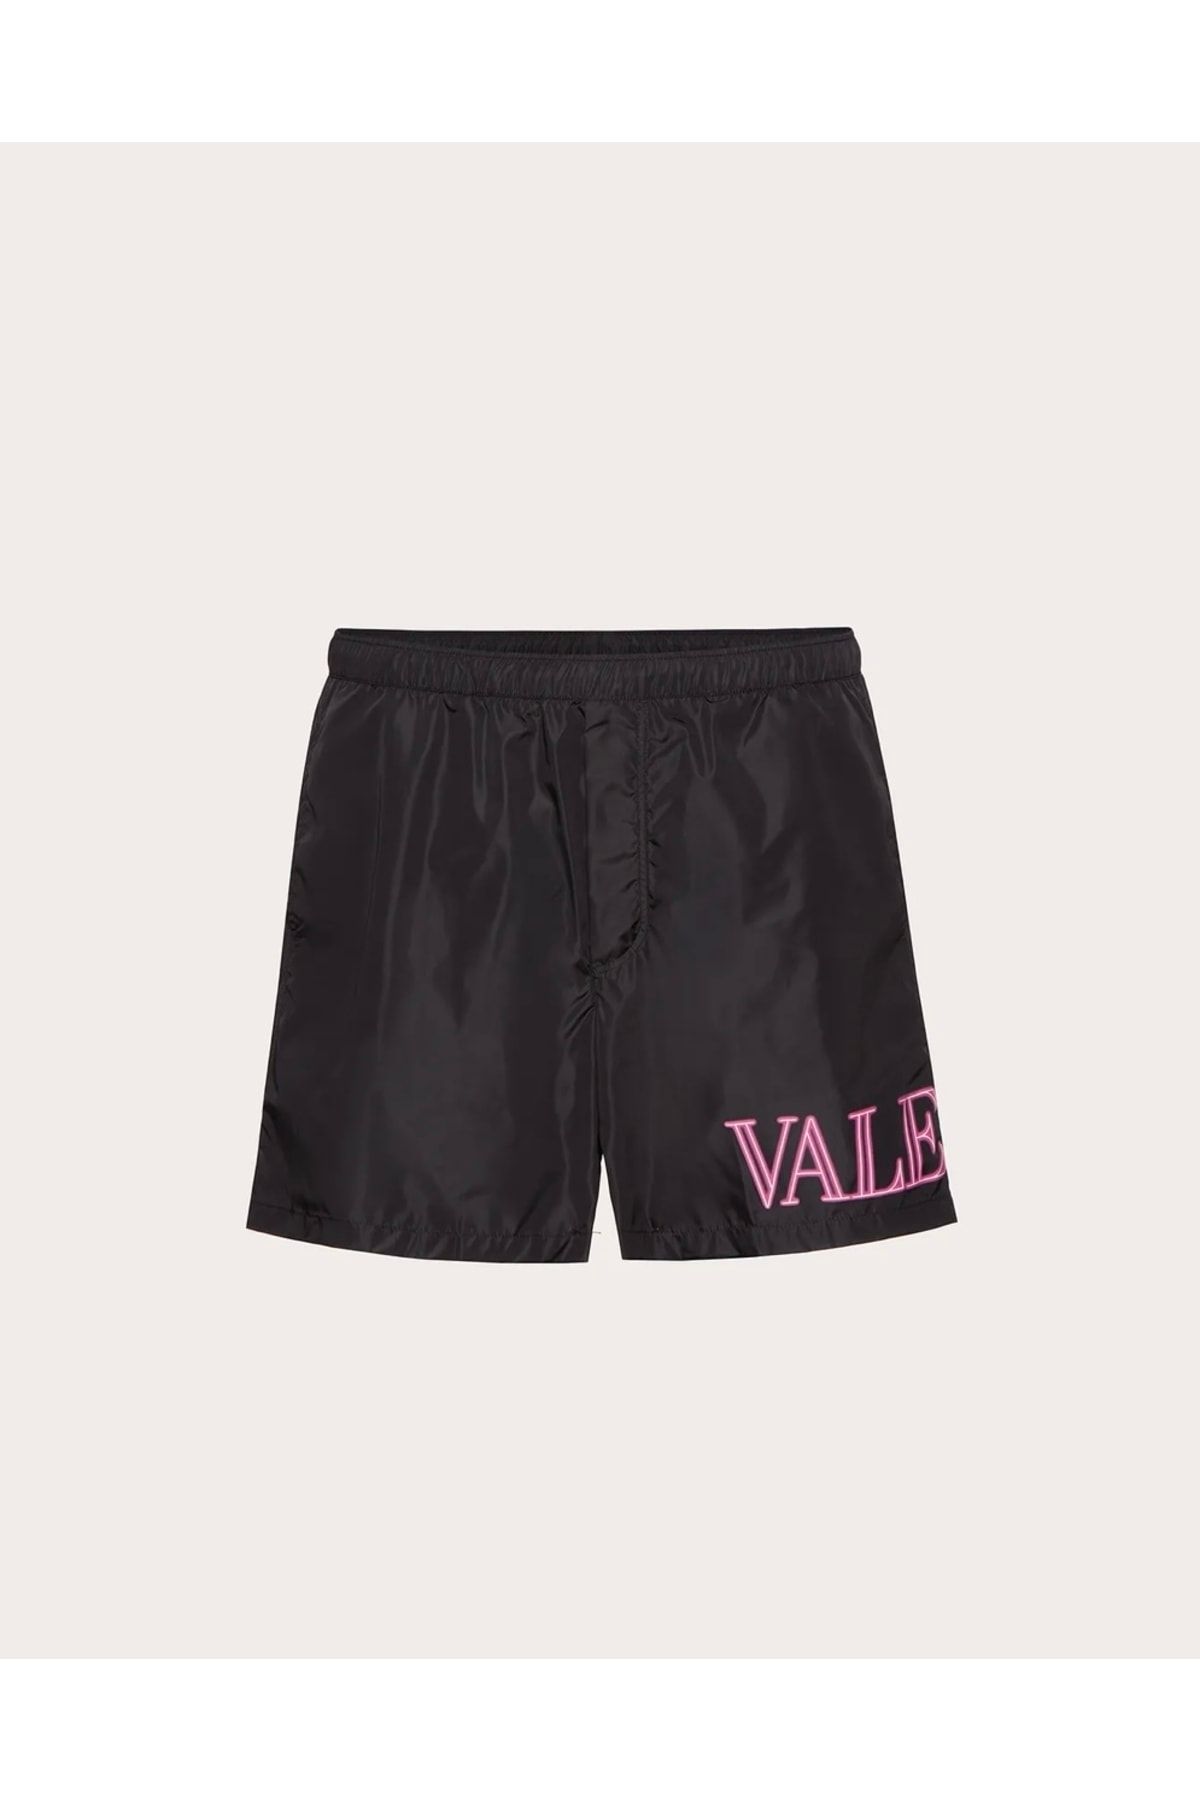 Valentino Swim Shorts With Neon Universe Print